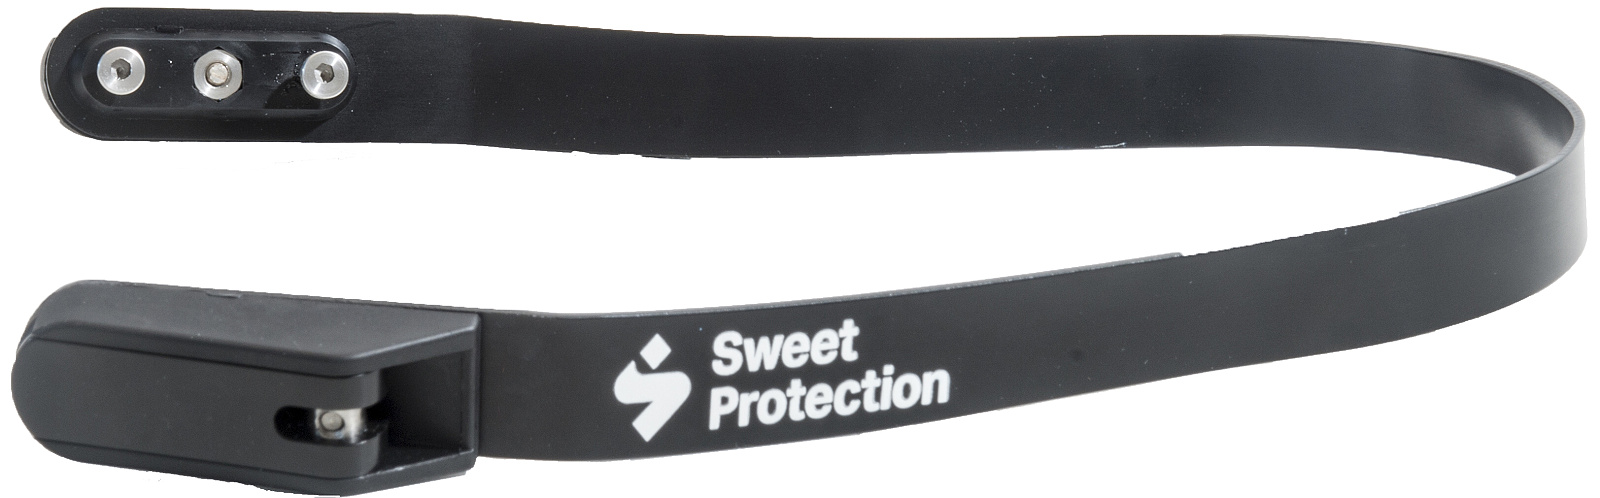 sweet protection volata chin guard.jpg